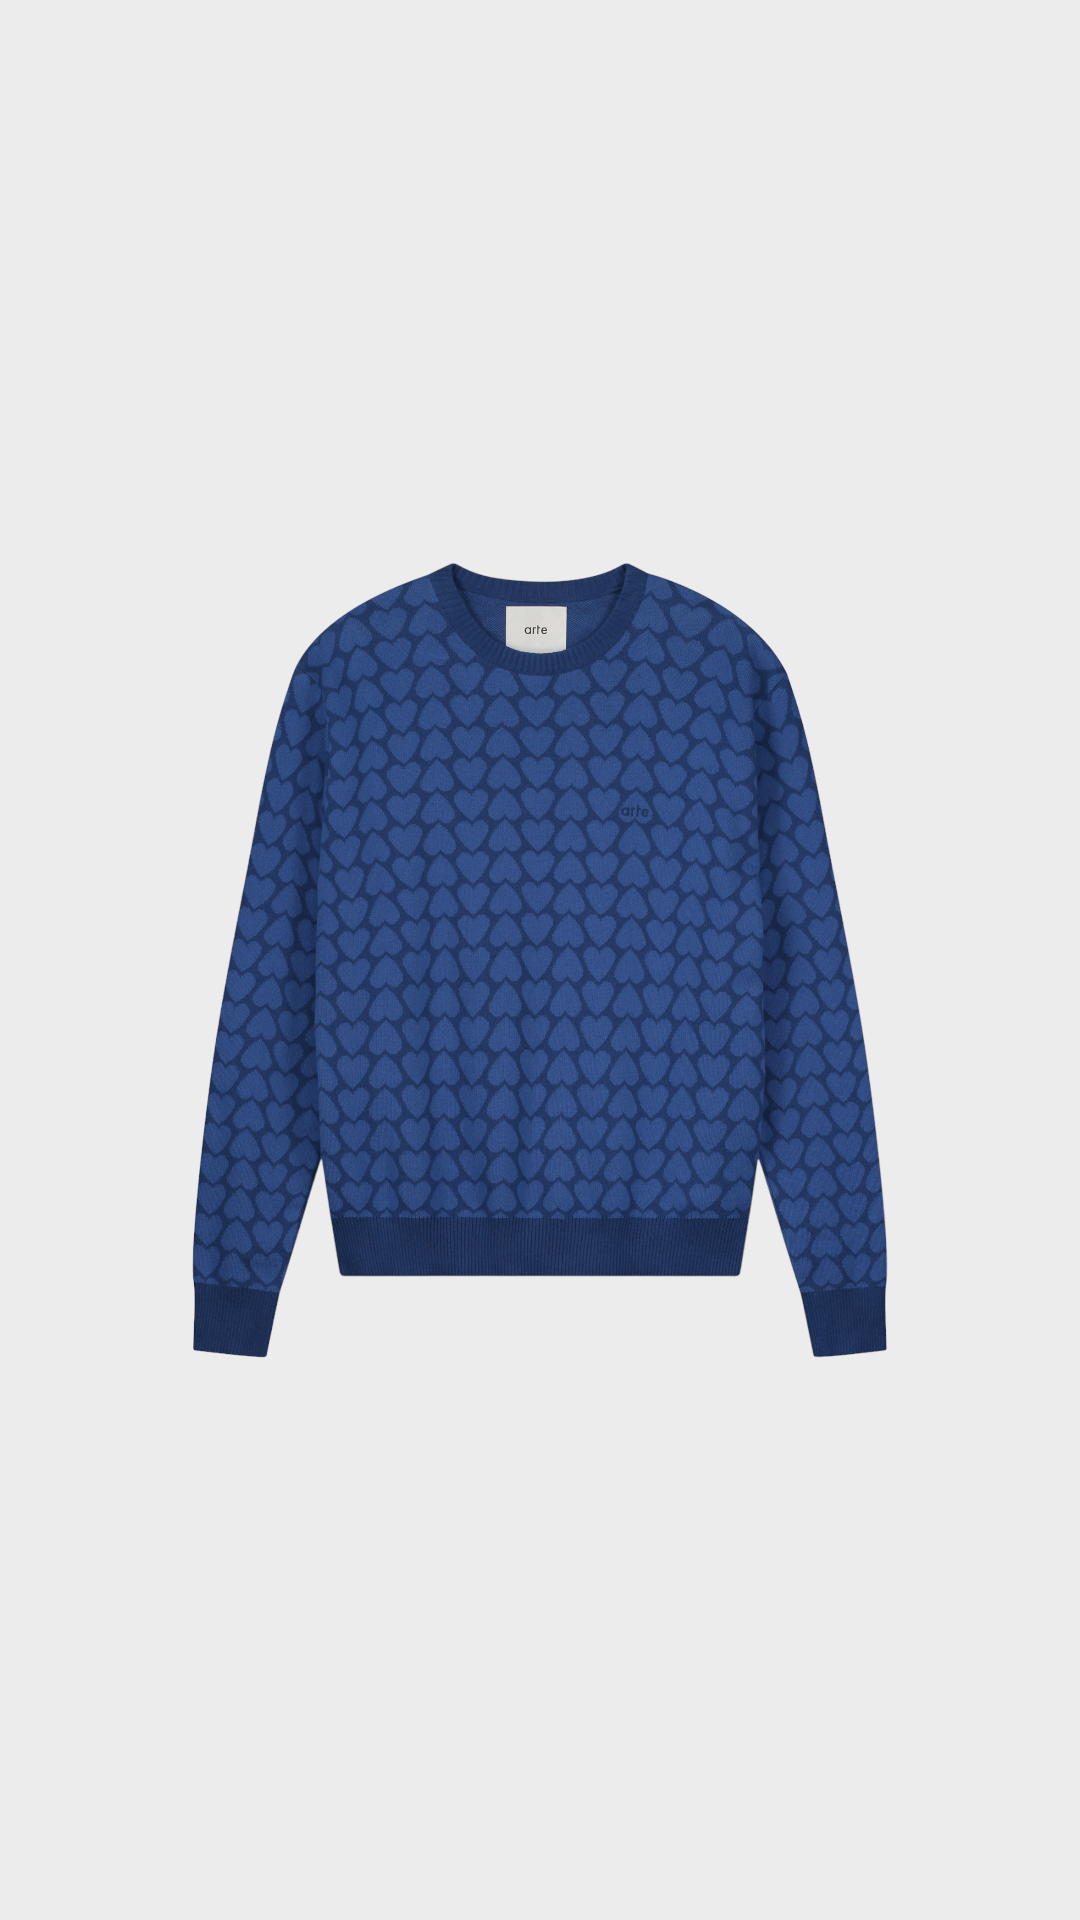 Kobe Heart Sweater